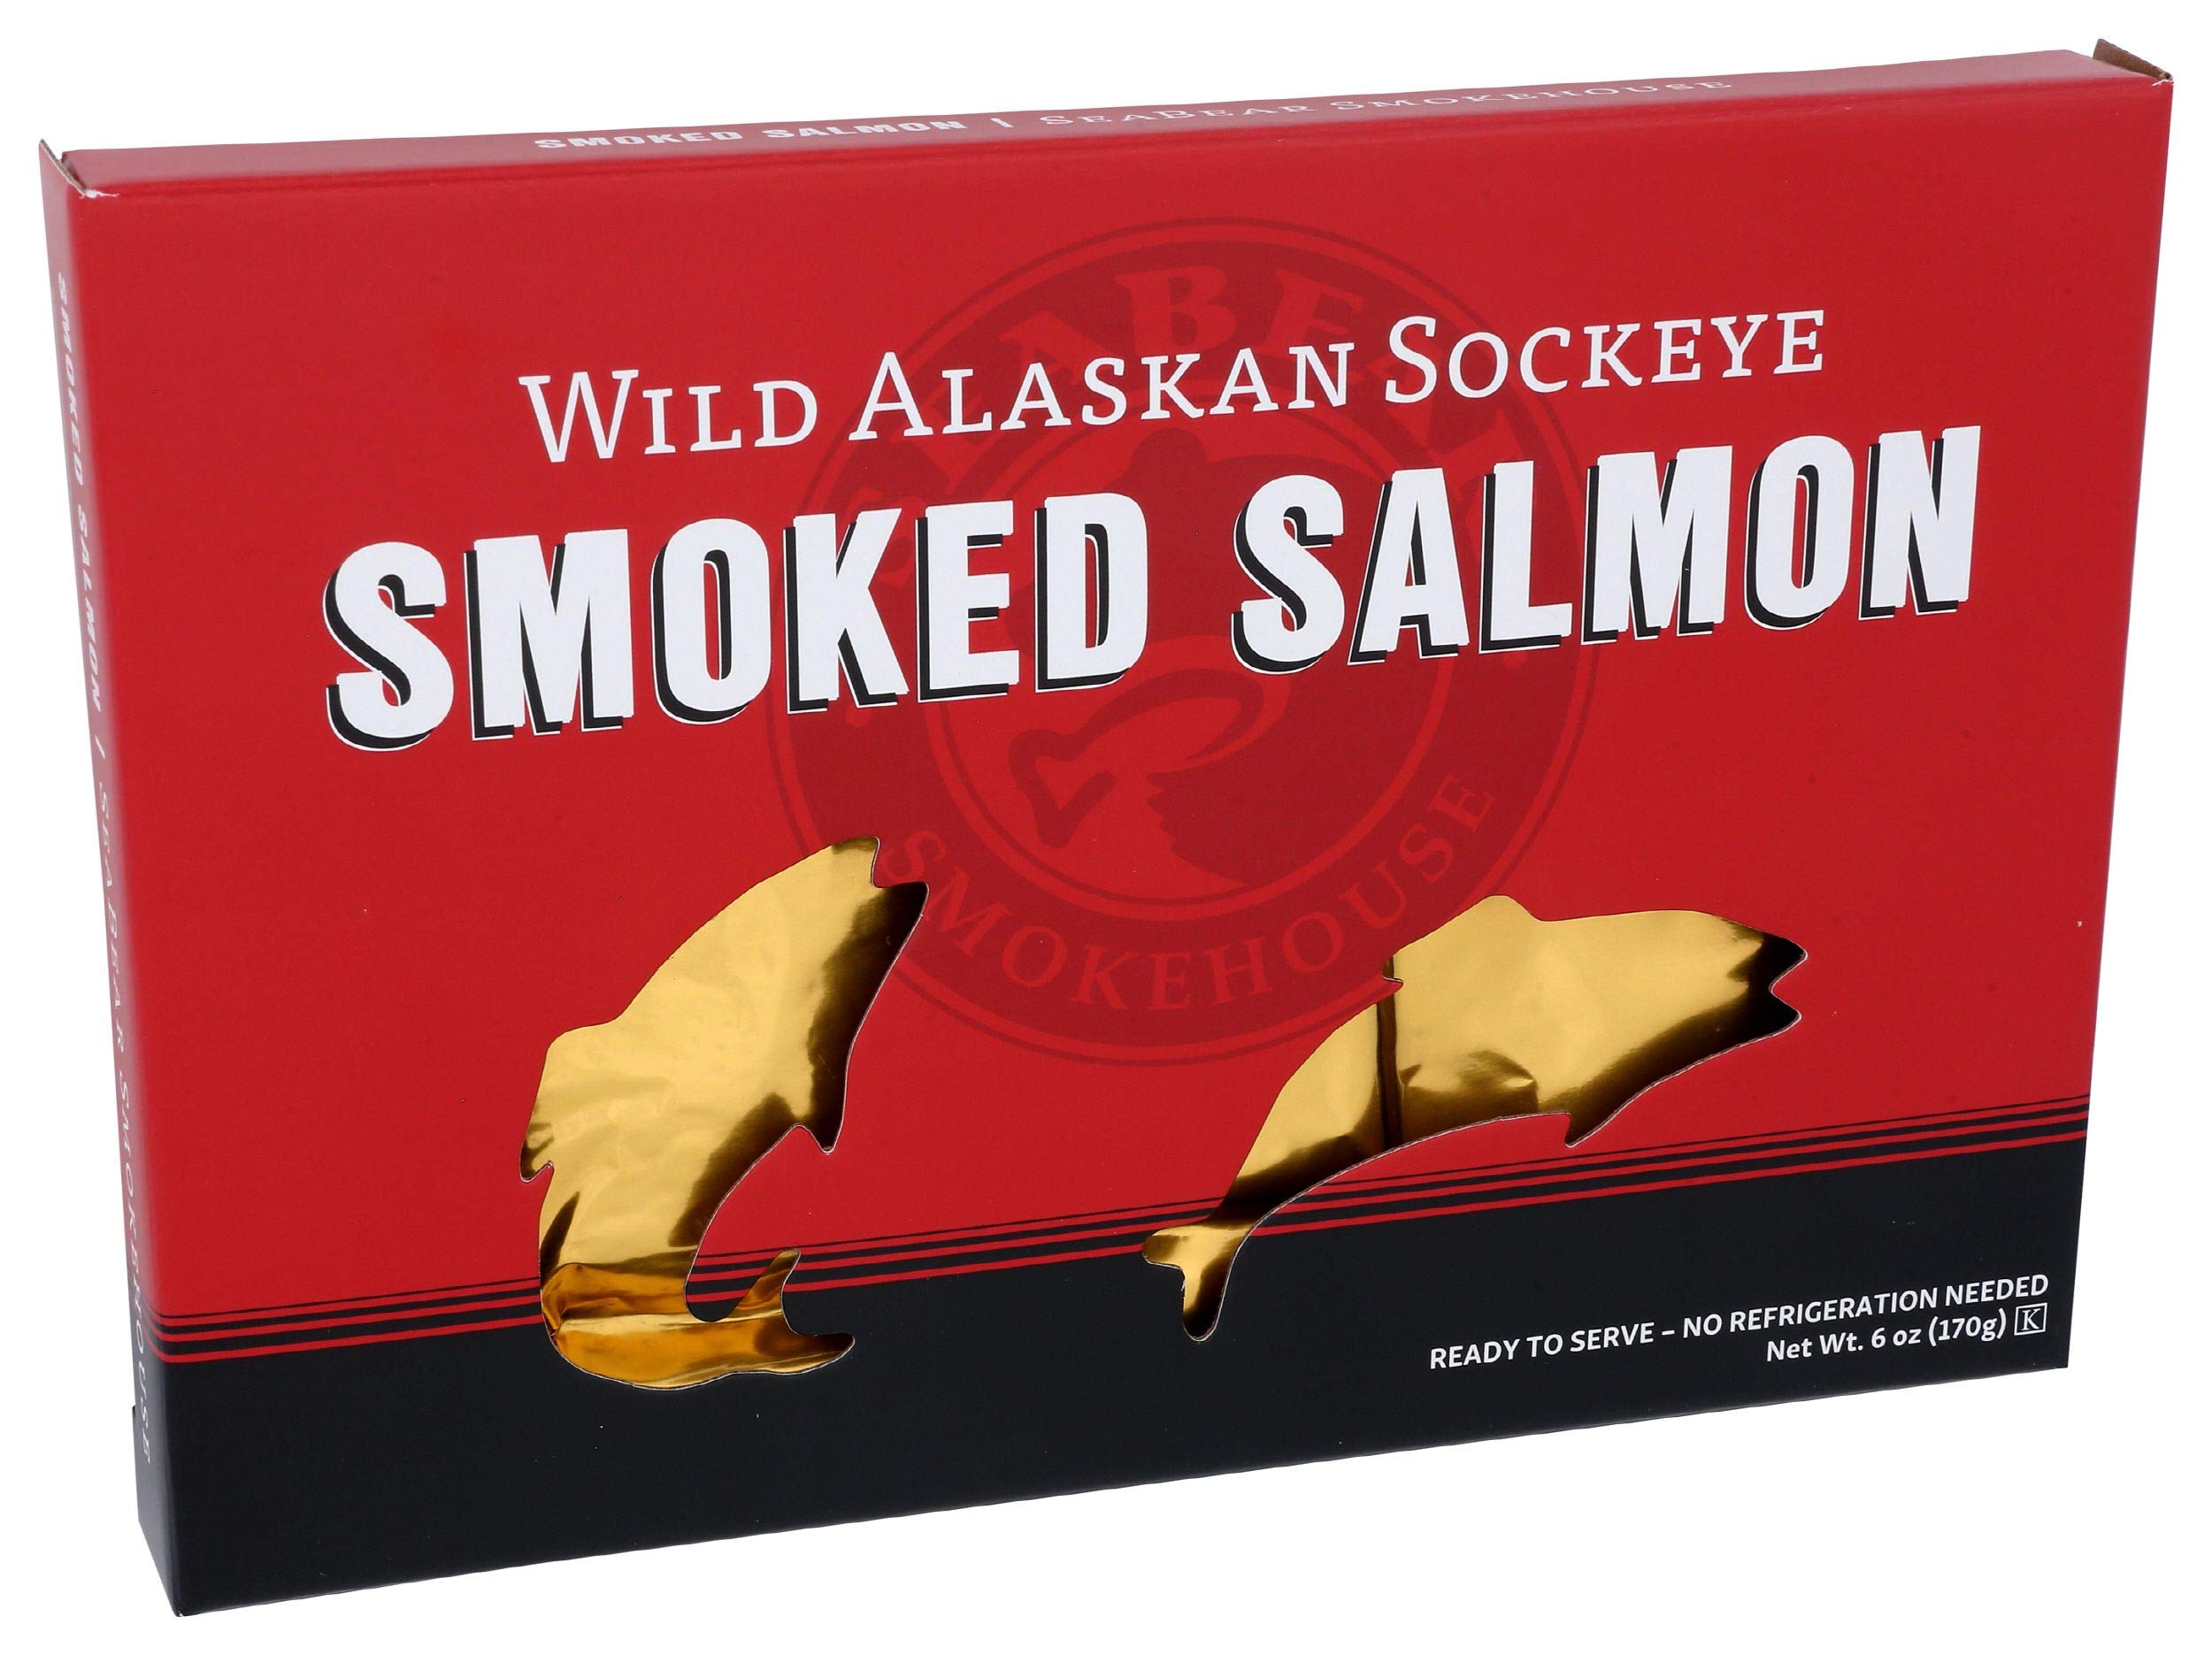 Pacific Salmon Large Box - FREE SHIPPING - Keta Salmon Gift Box 16 oz